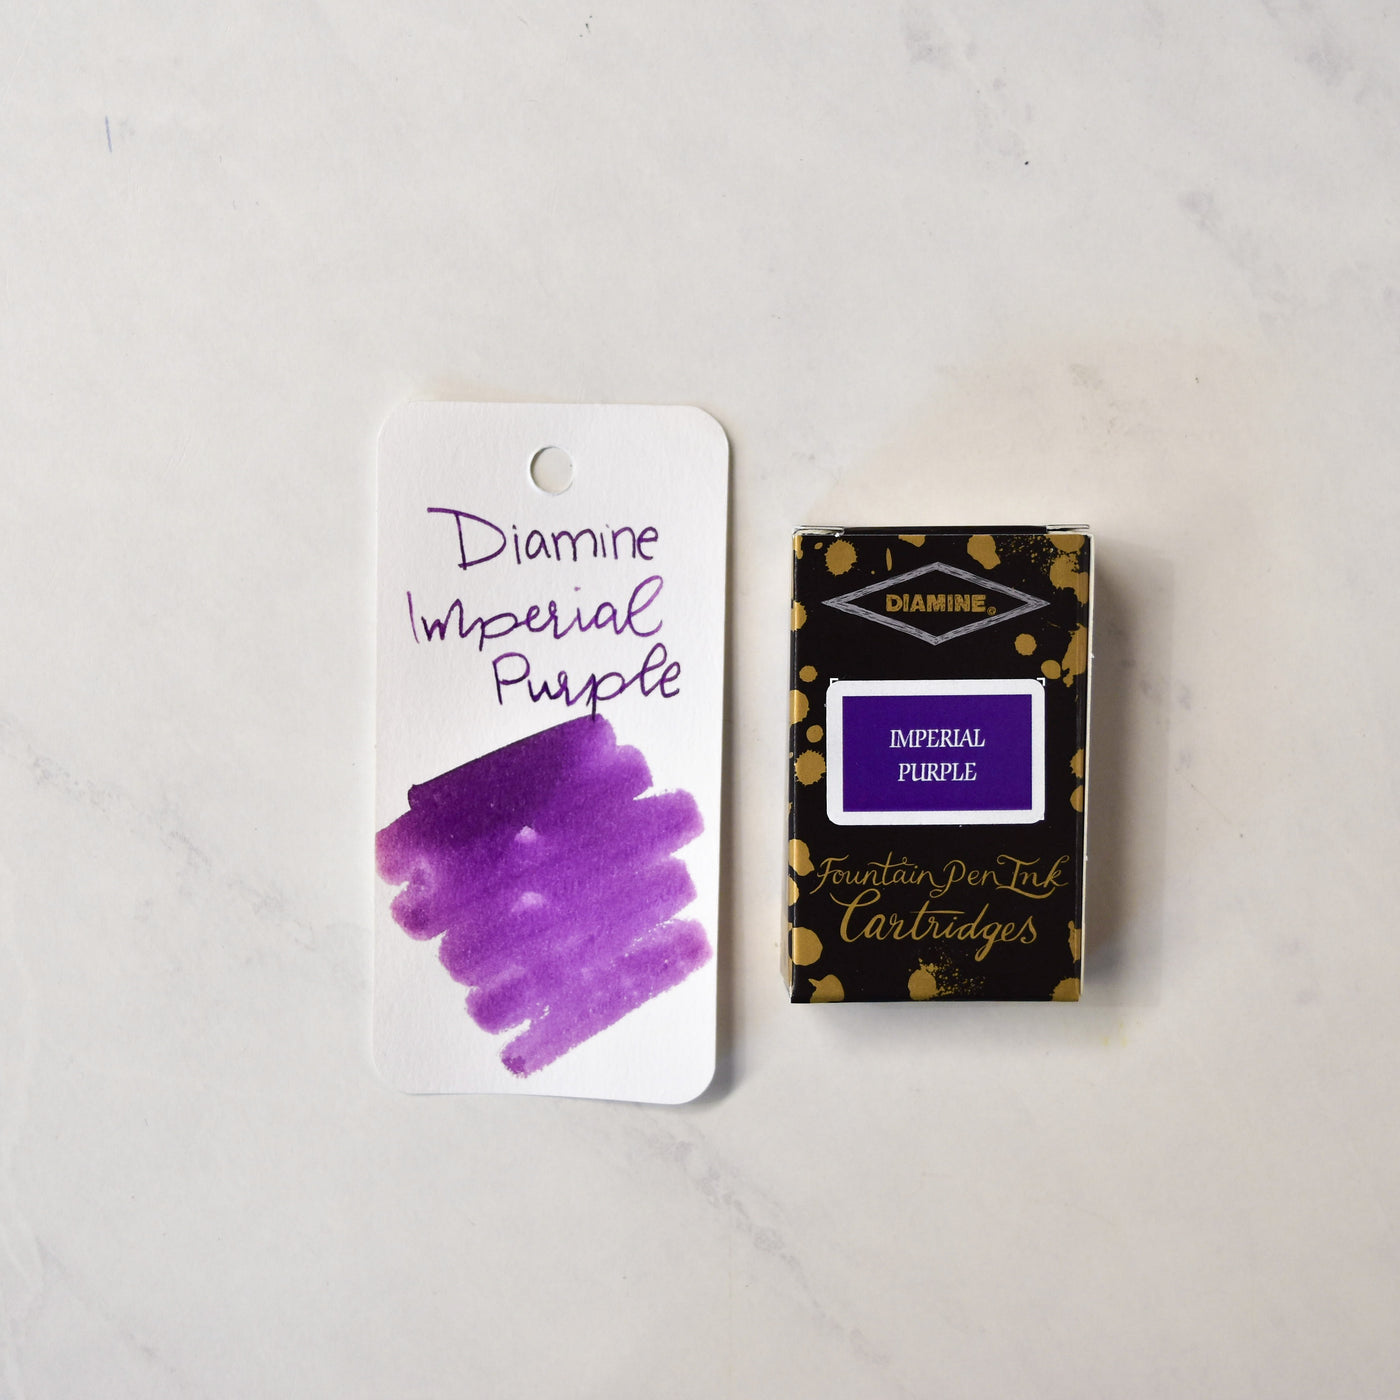 Diamine Imperial Purple Ink Cartridges - Pack of 18